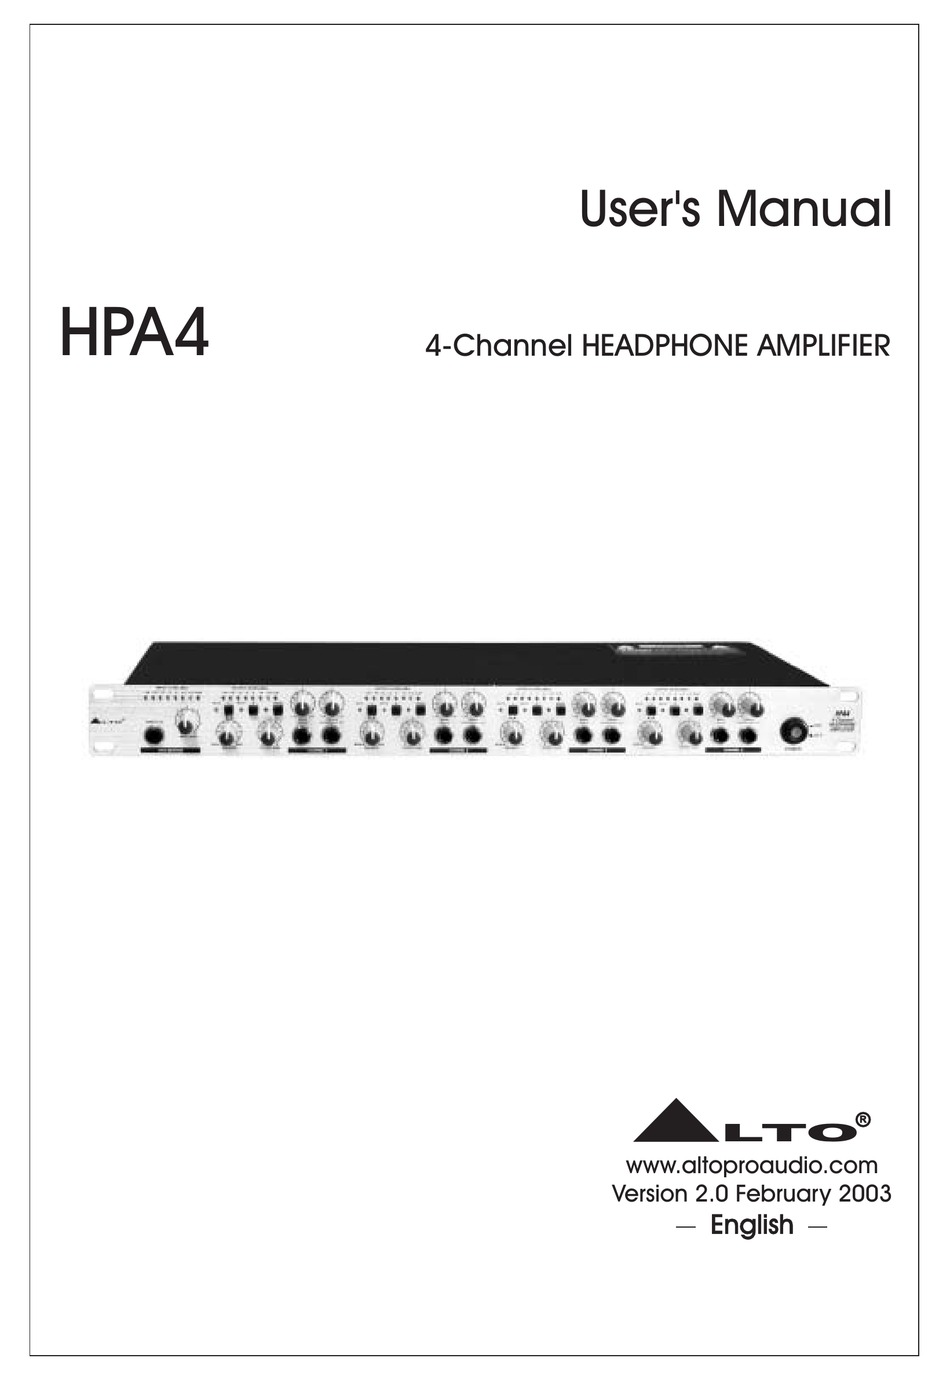 ALTO HPA4 USER MANUAL Pdf Download | ManualsLib